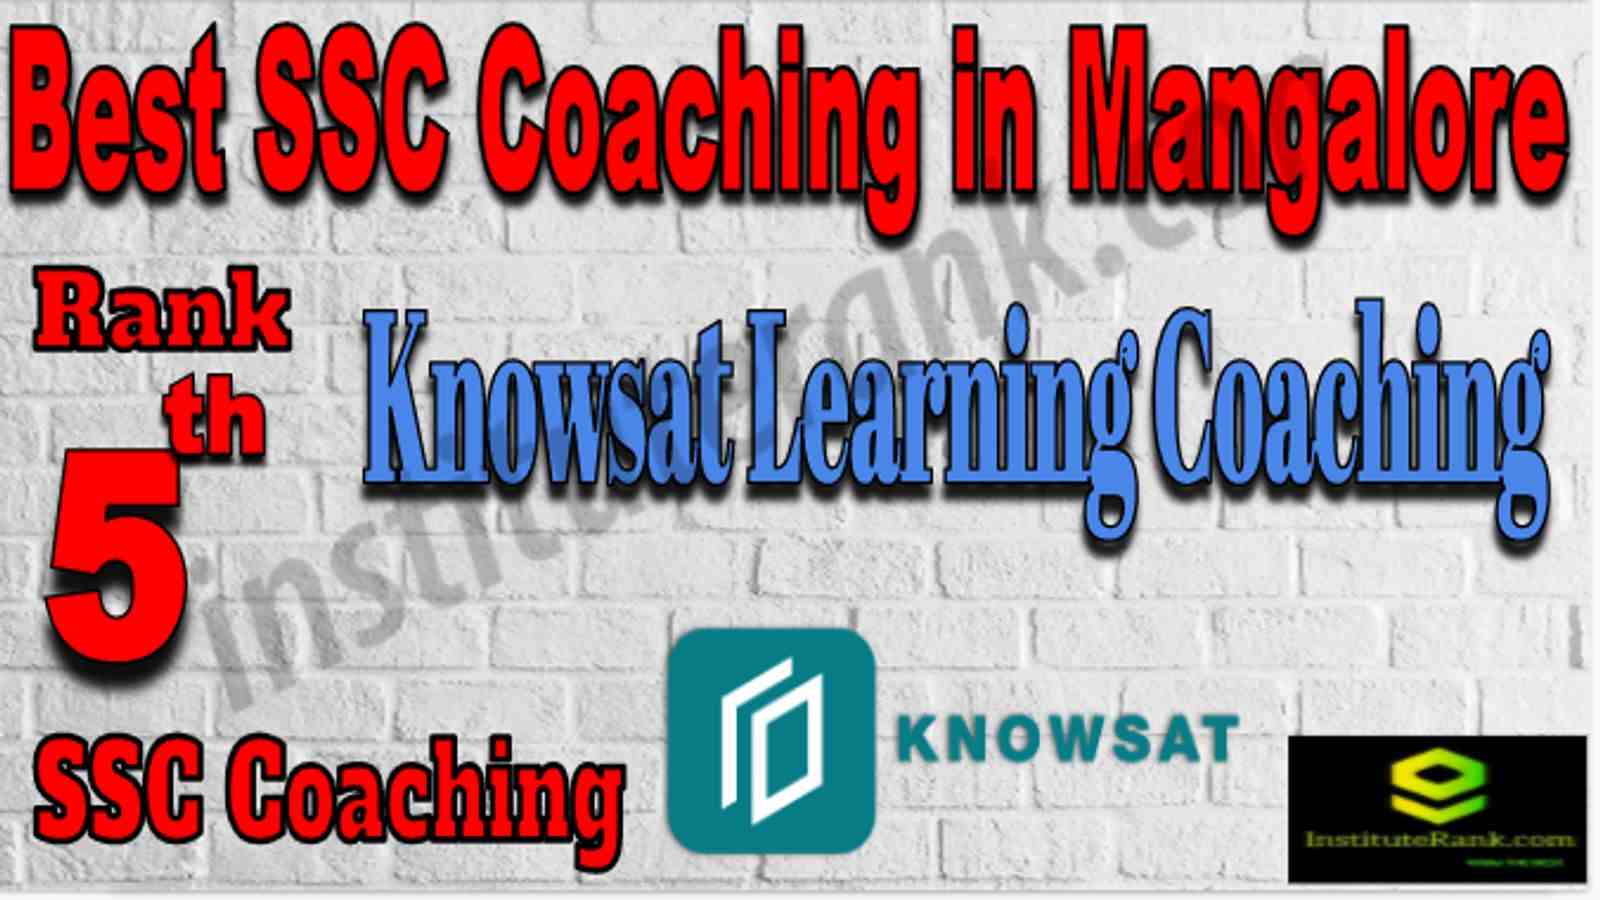 Rank 5 Best SSC Coaching in Mangalore